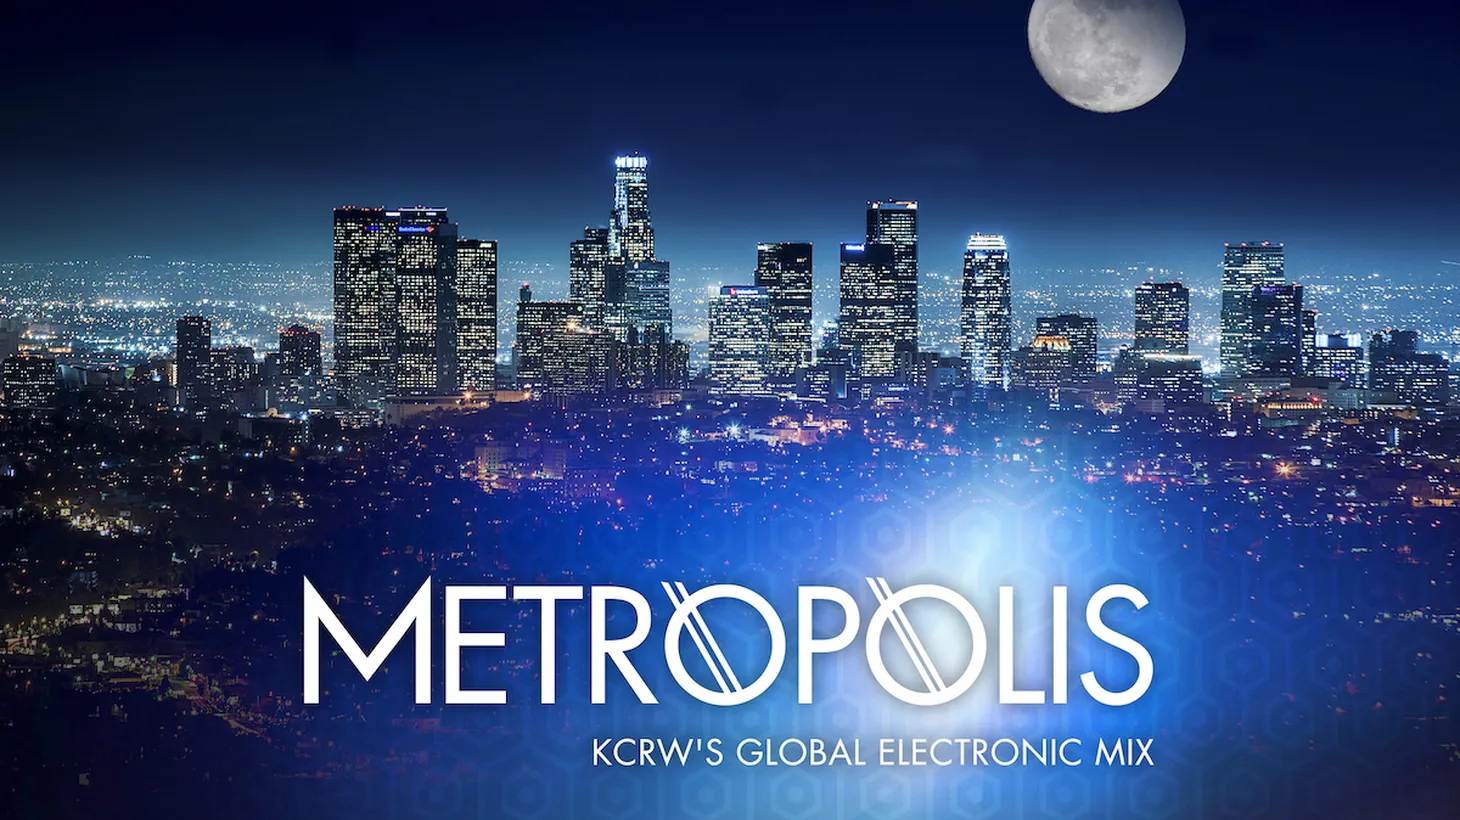 Metropolis playlist, December 25, 2021.